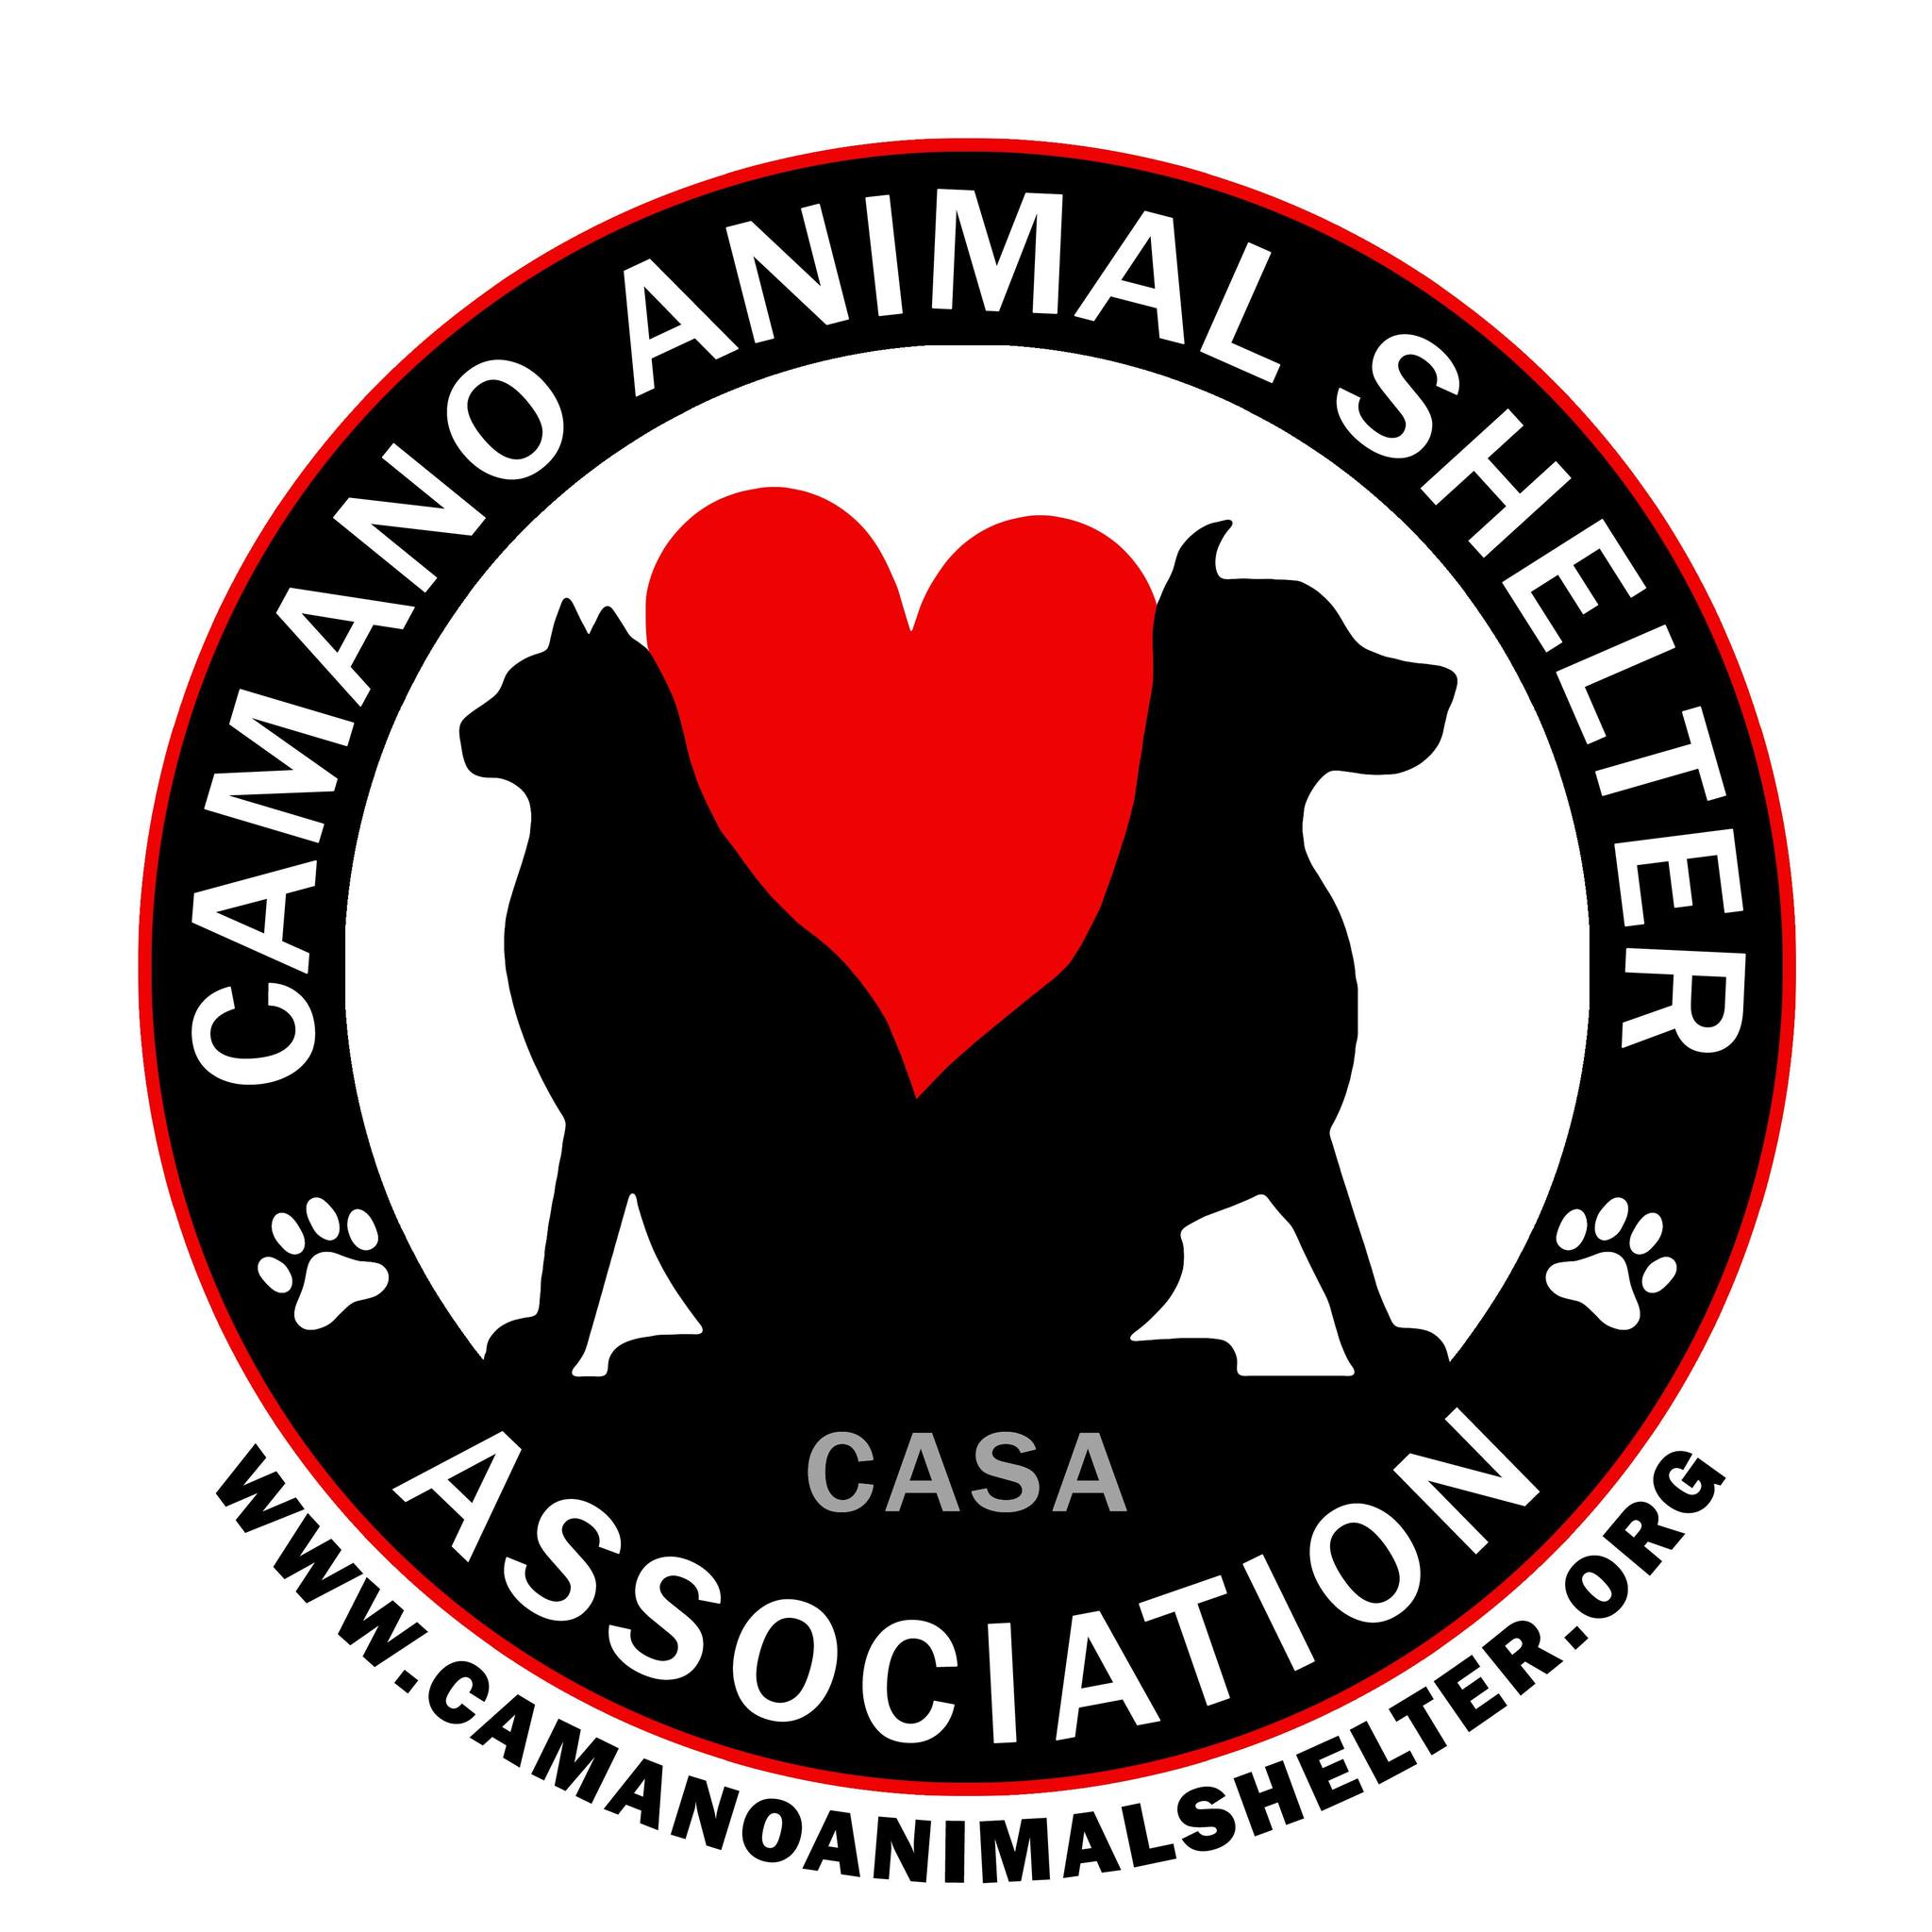 Camano Animal Shelter Association